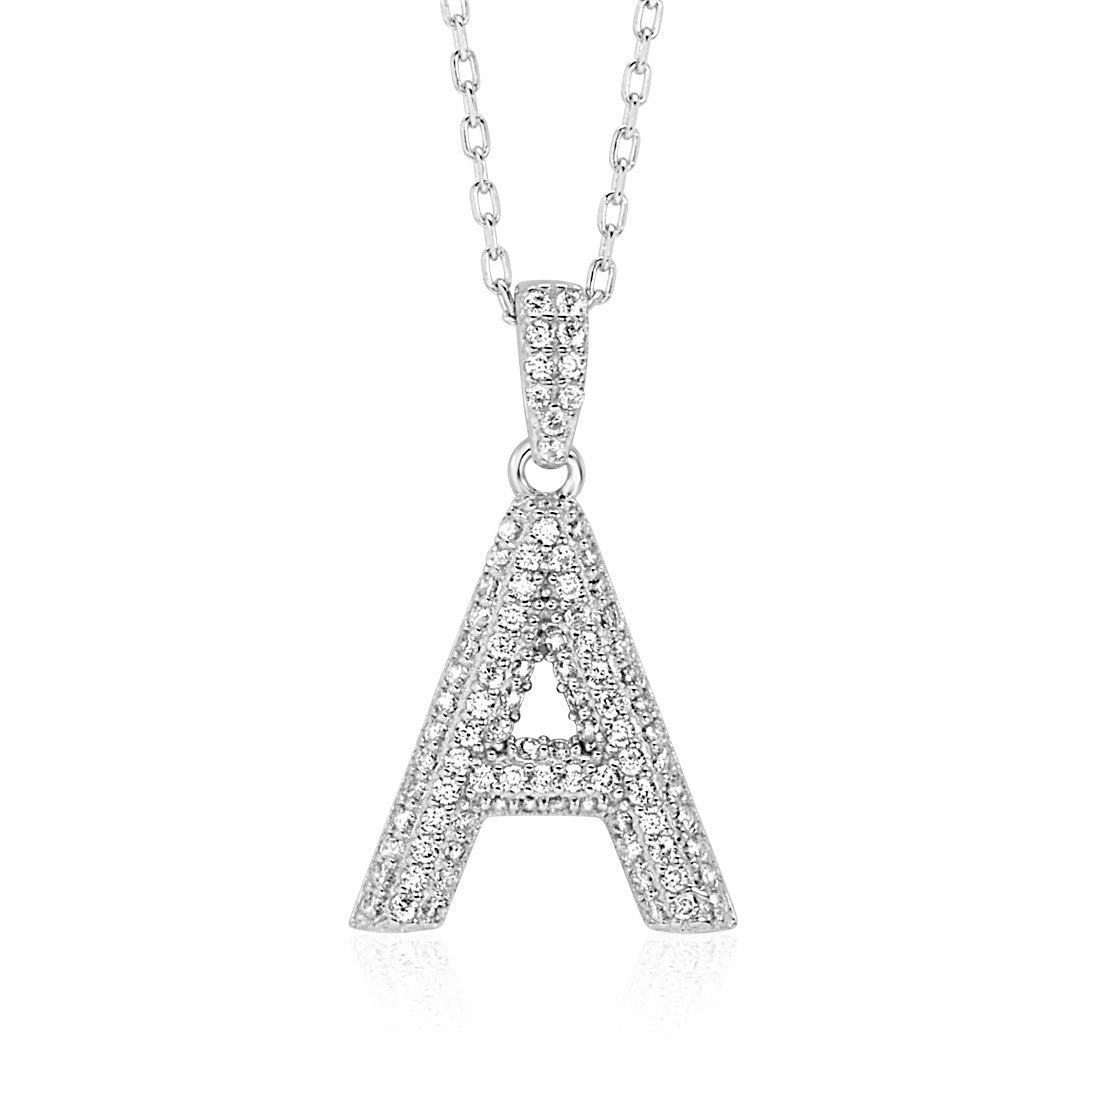 Letter V Alphabet Initial Silver Necklace 